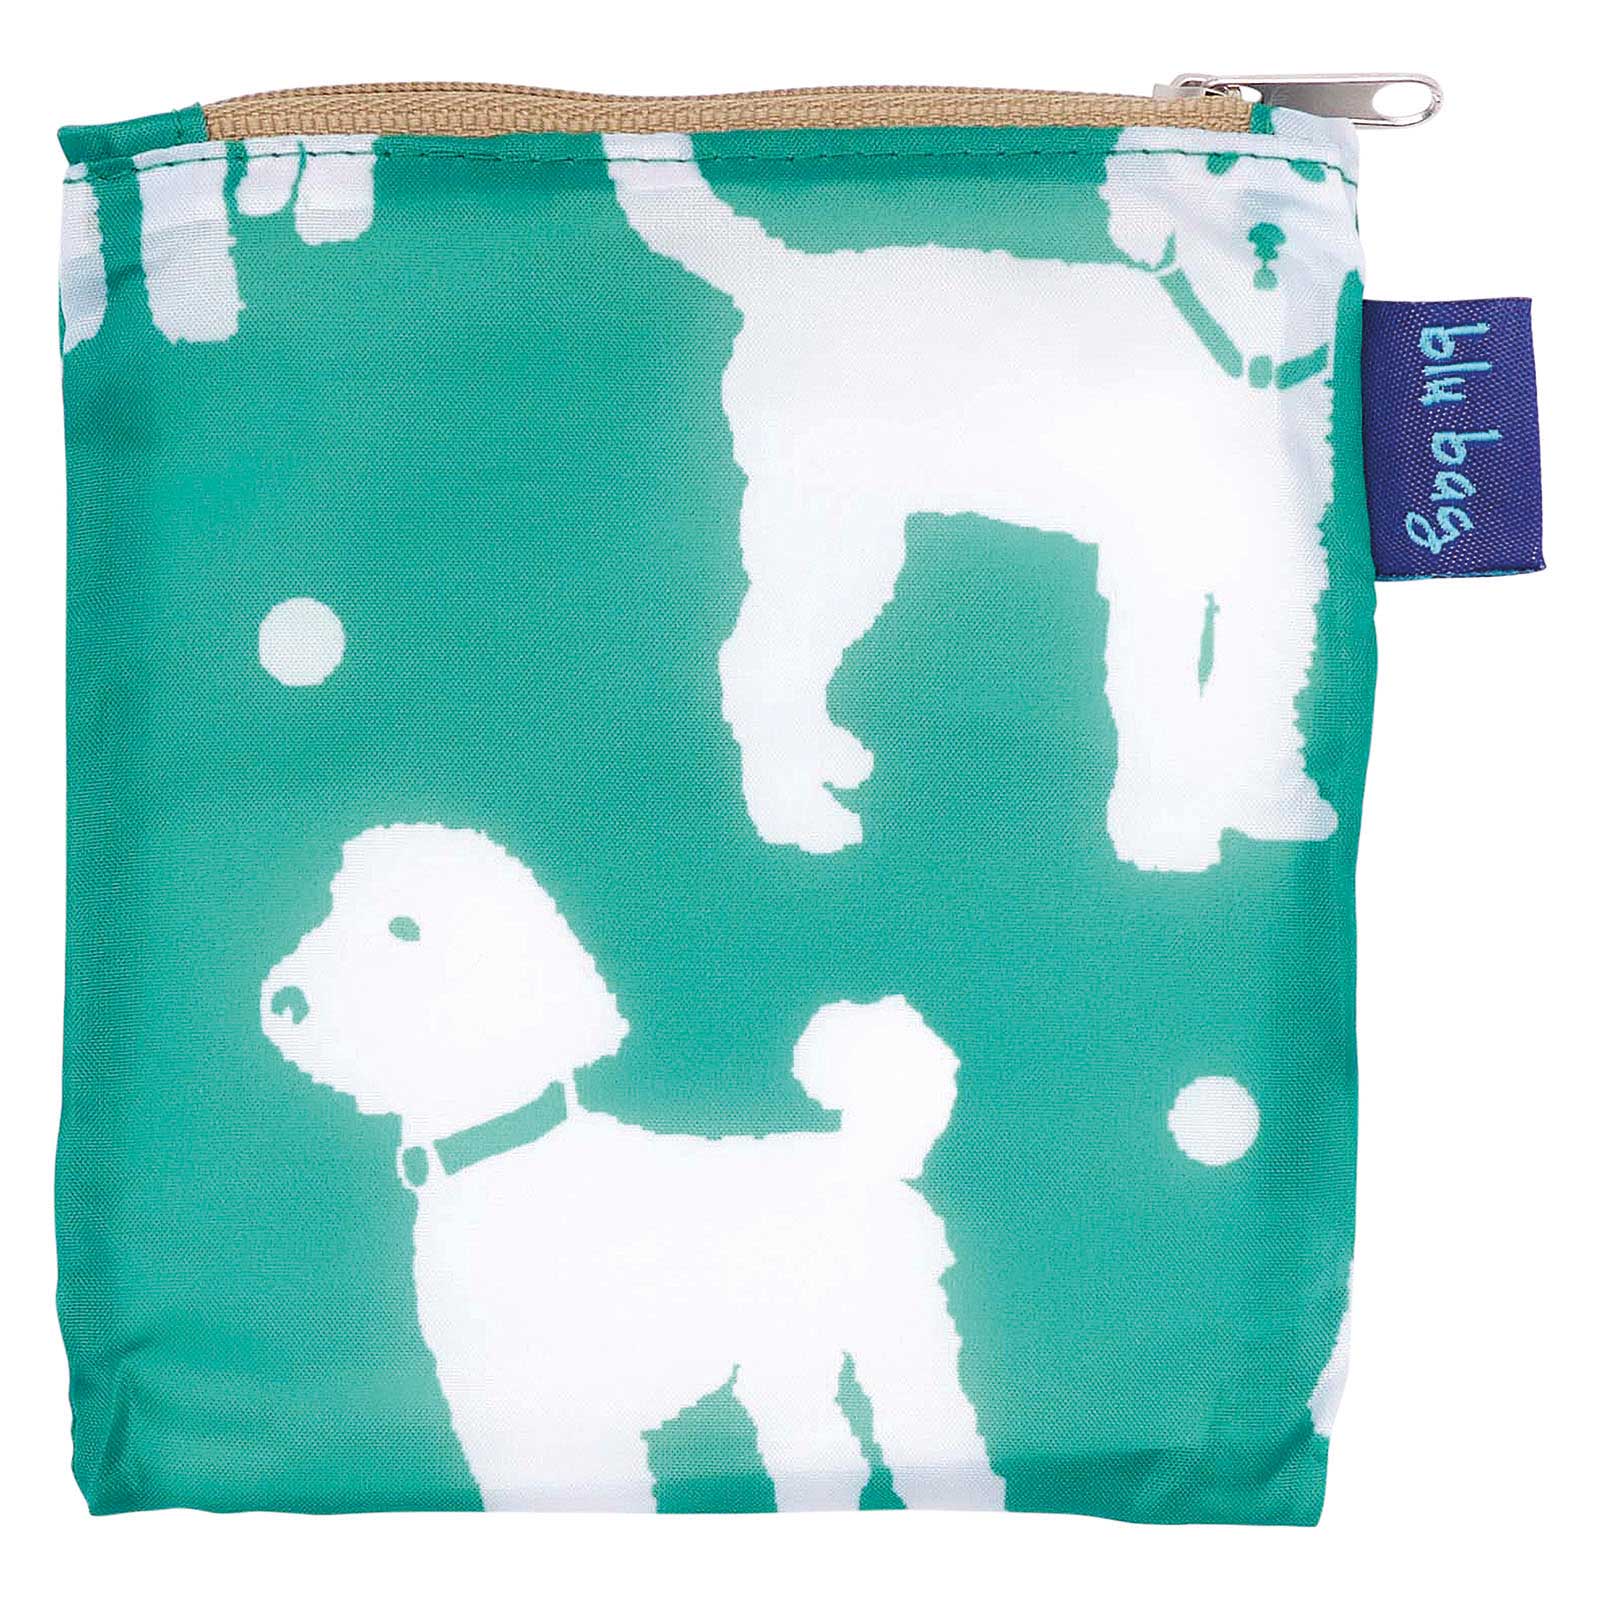 Marvin Blu Bag Reusable Shopping Bag - Machine Washable Reusable Shopping Bag - rockflowerpaper